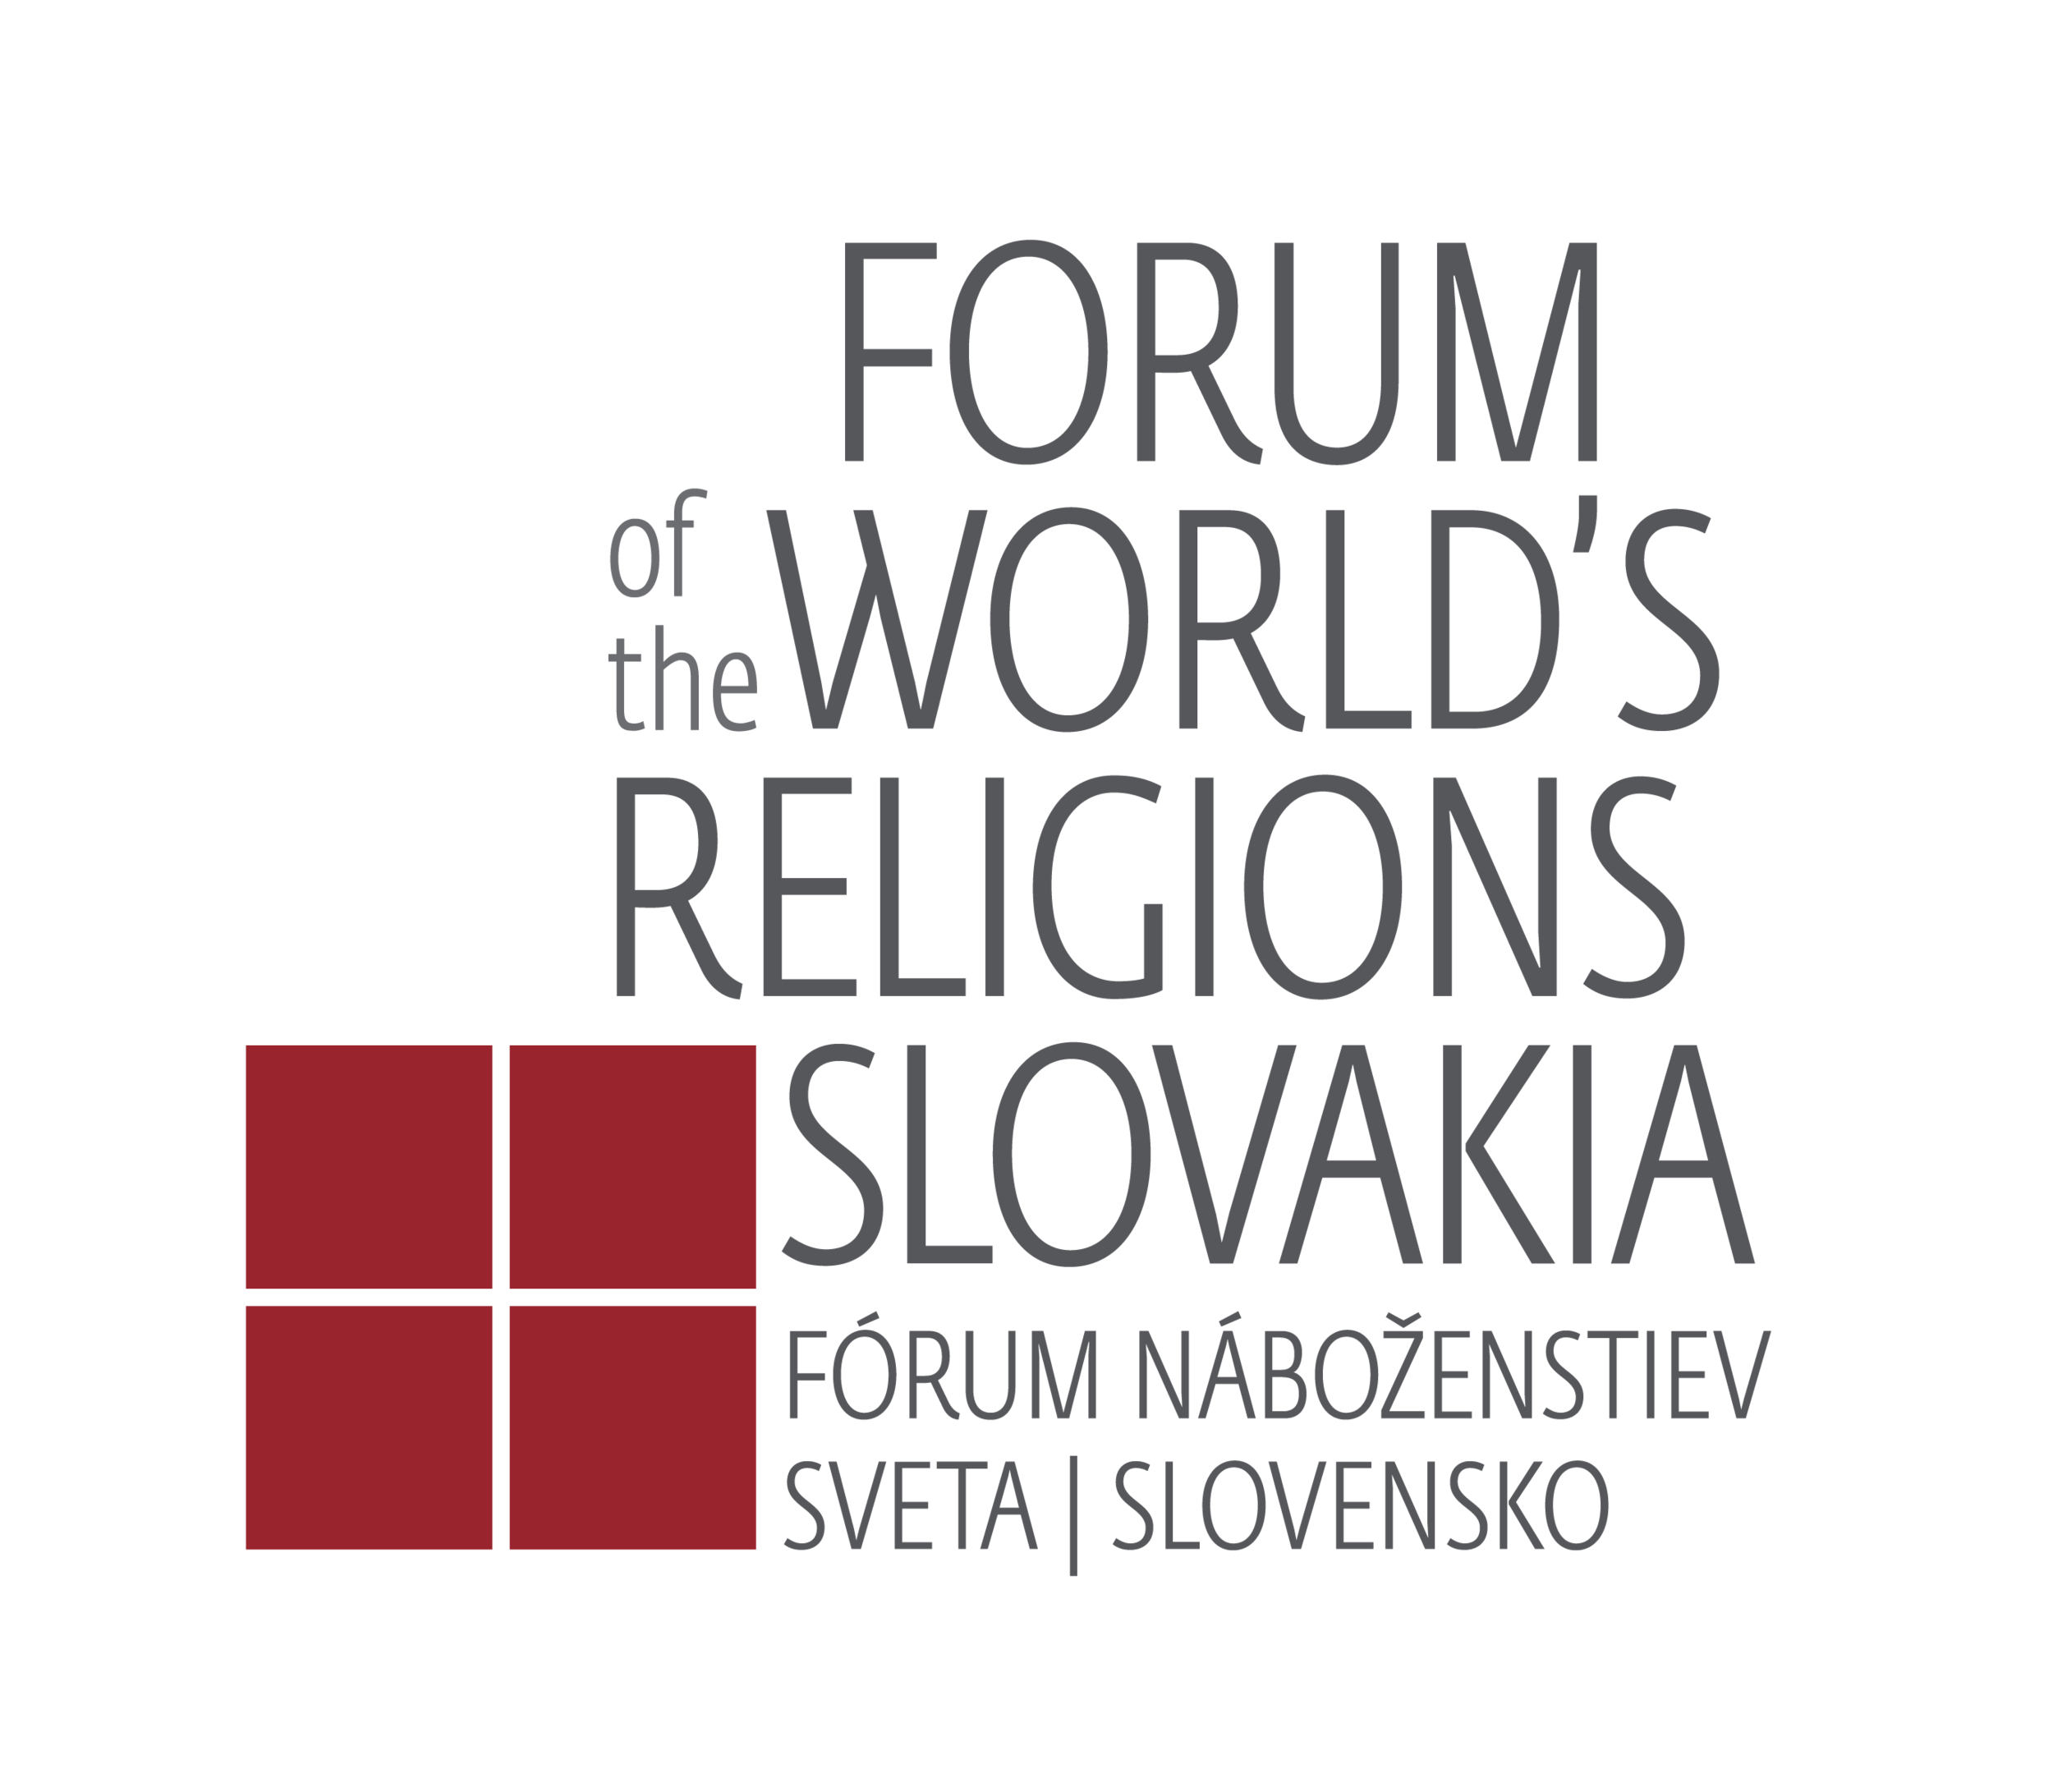 Forum of the World's Religions Slovakia